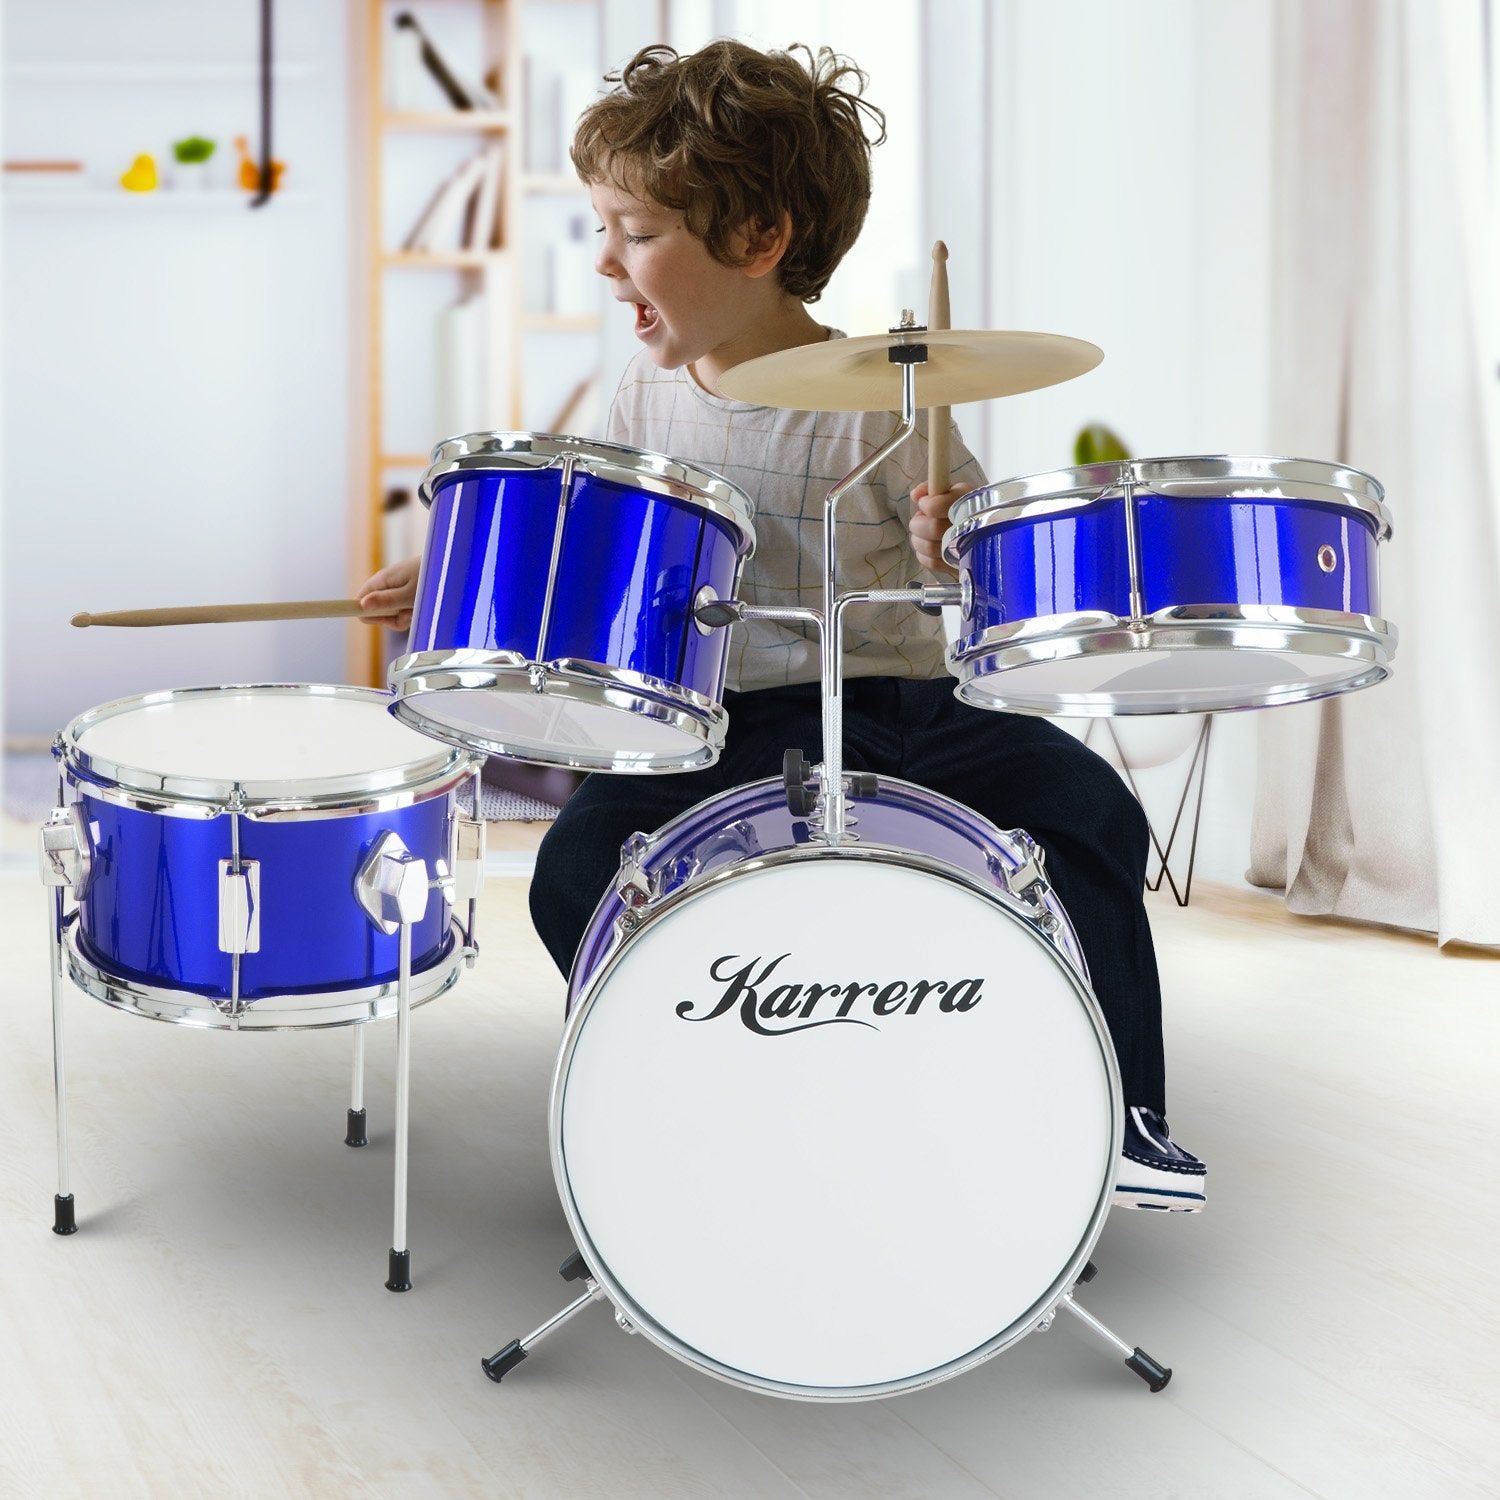 Children's 4pc Drum Kit - Blue